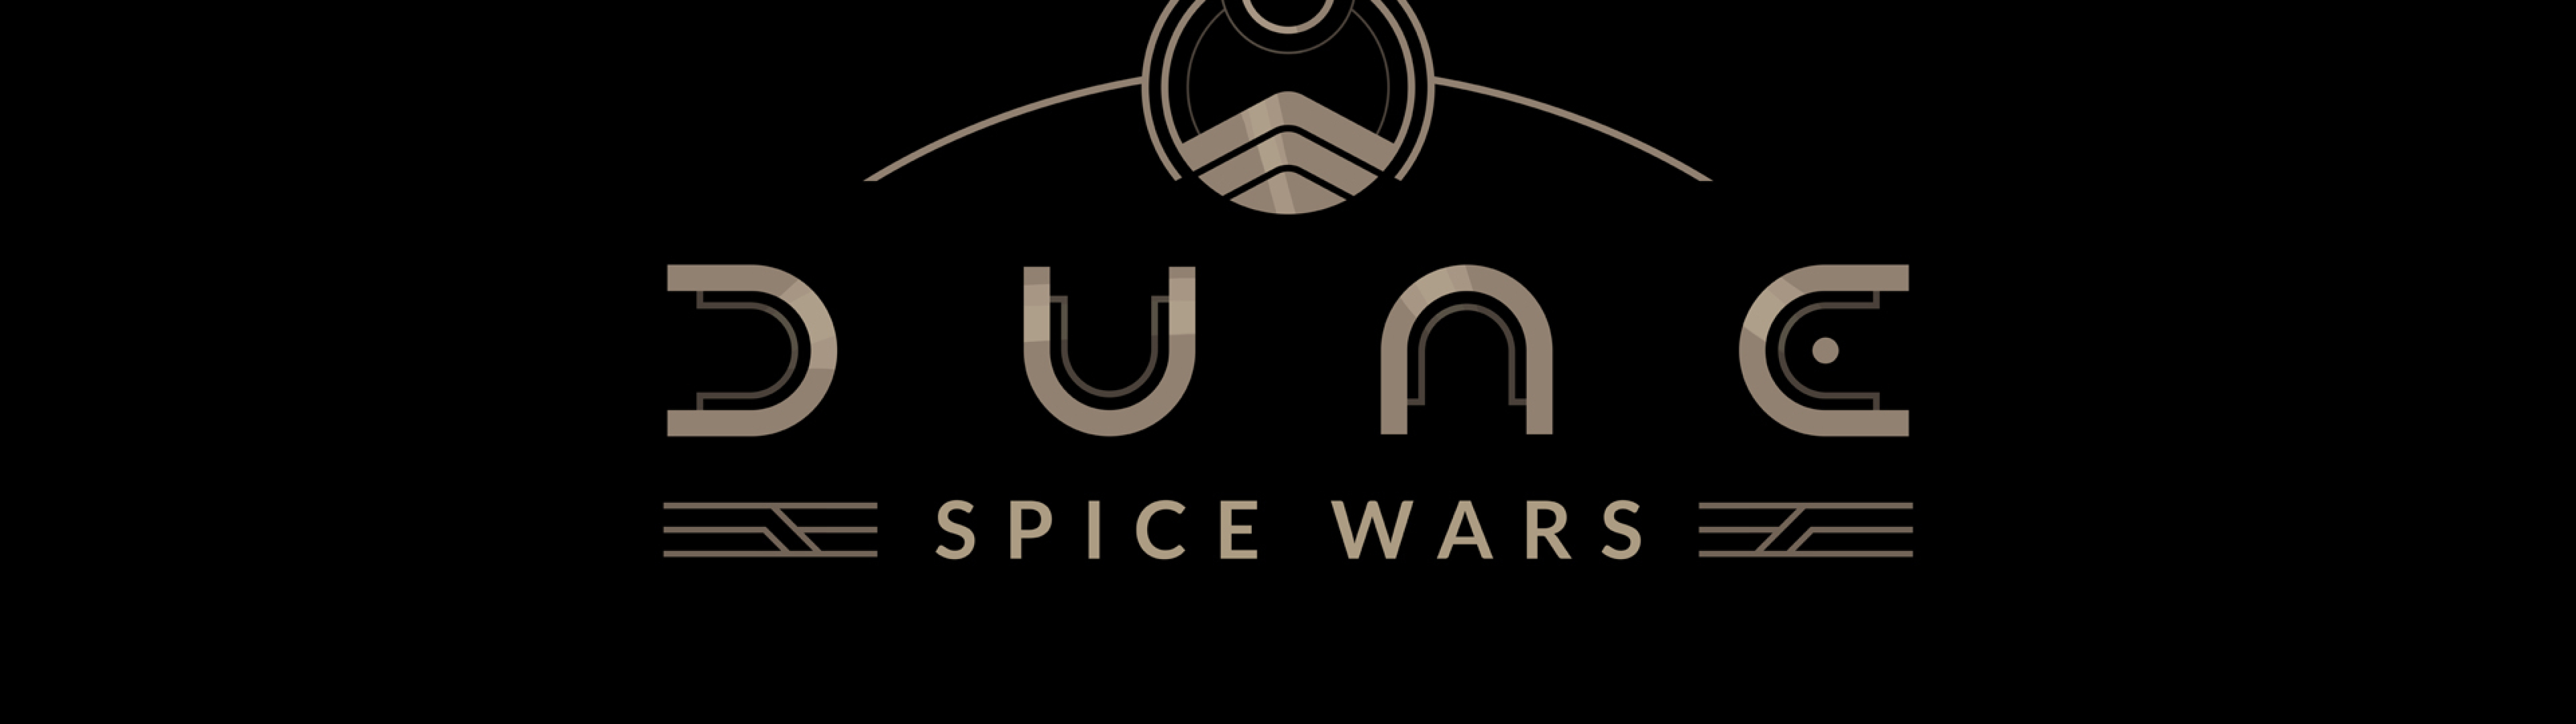 5120x1440 Dune Spice Wars Logo 5120x1440 Resolution Wallpaper, HD Games ...